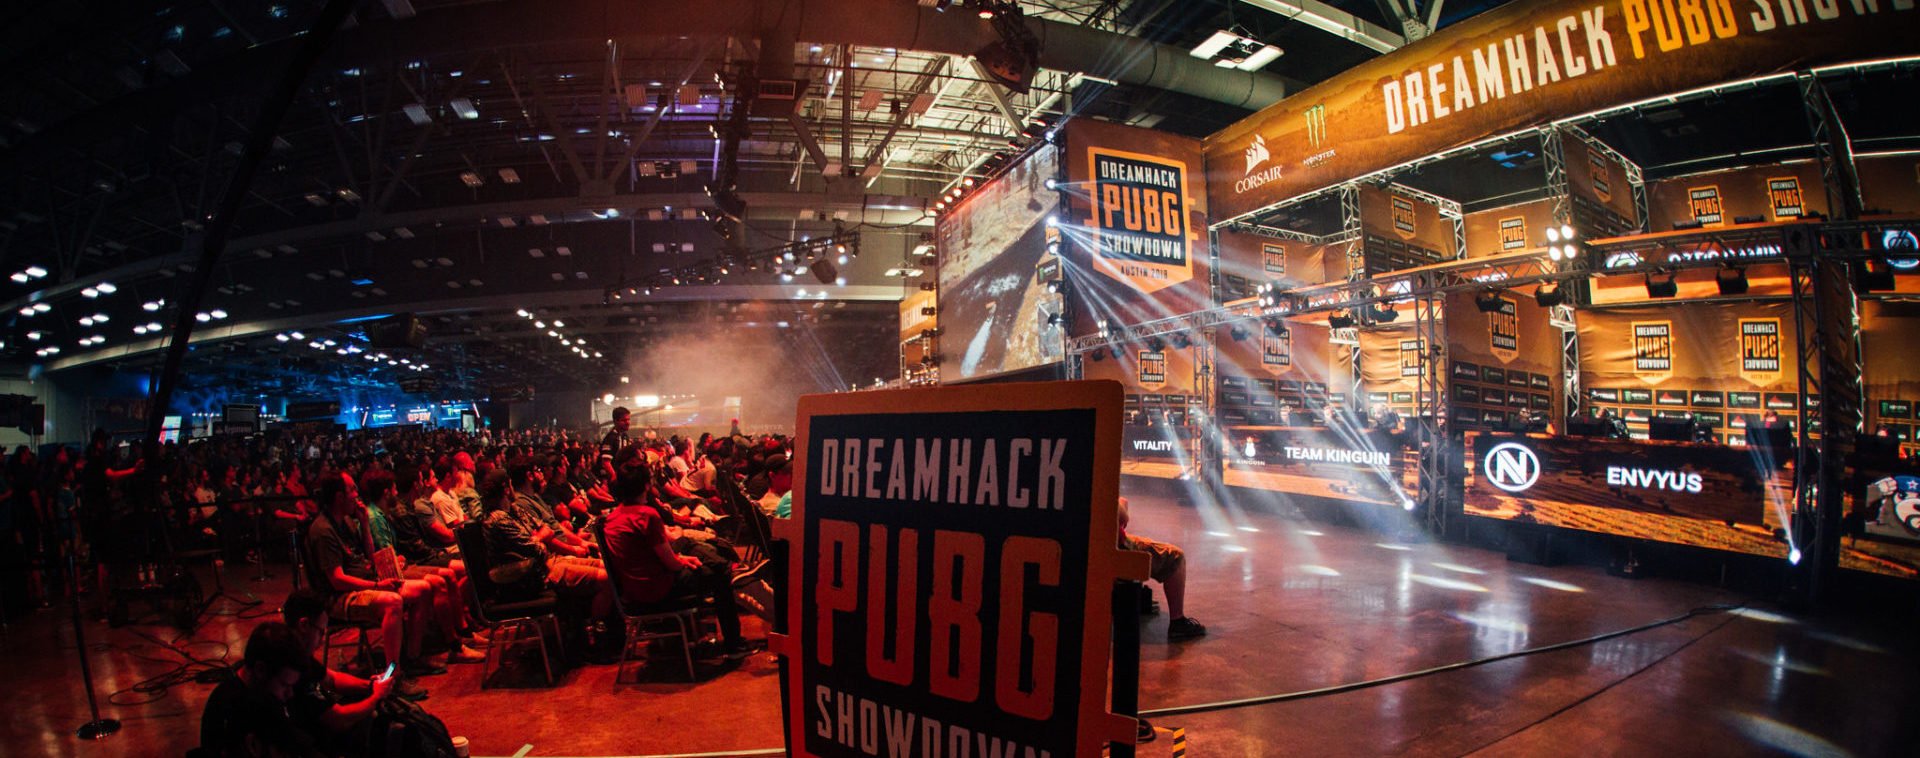 DreamHack PUBG Showdown Winter Etkinliği Duyuruldu esportimes